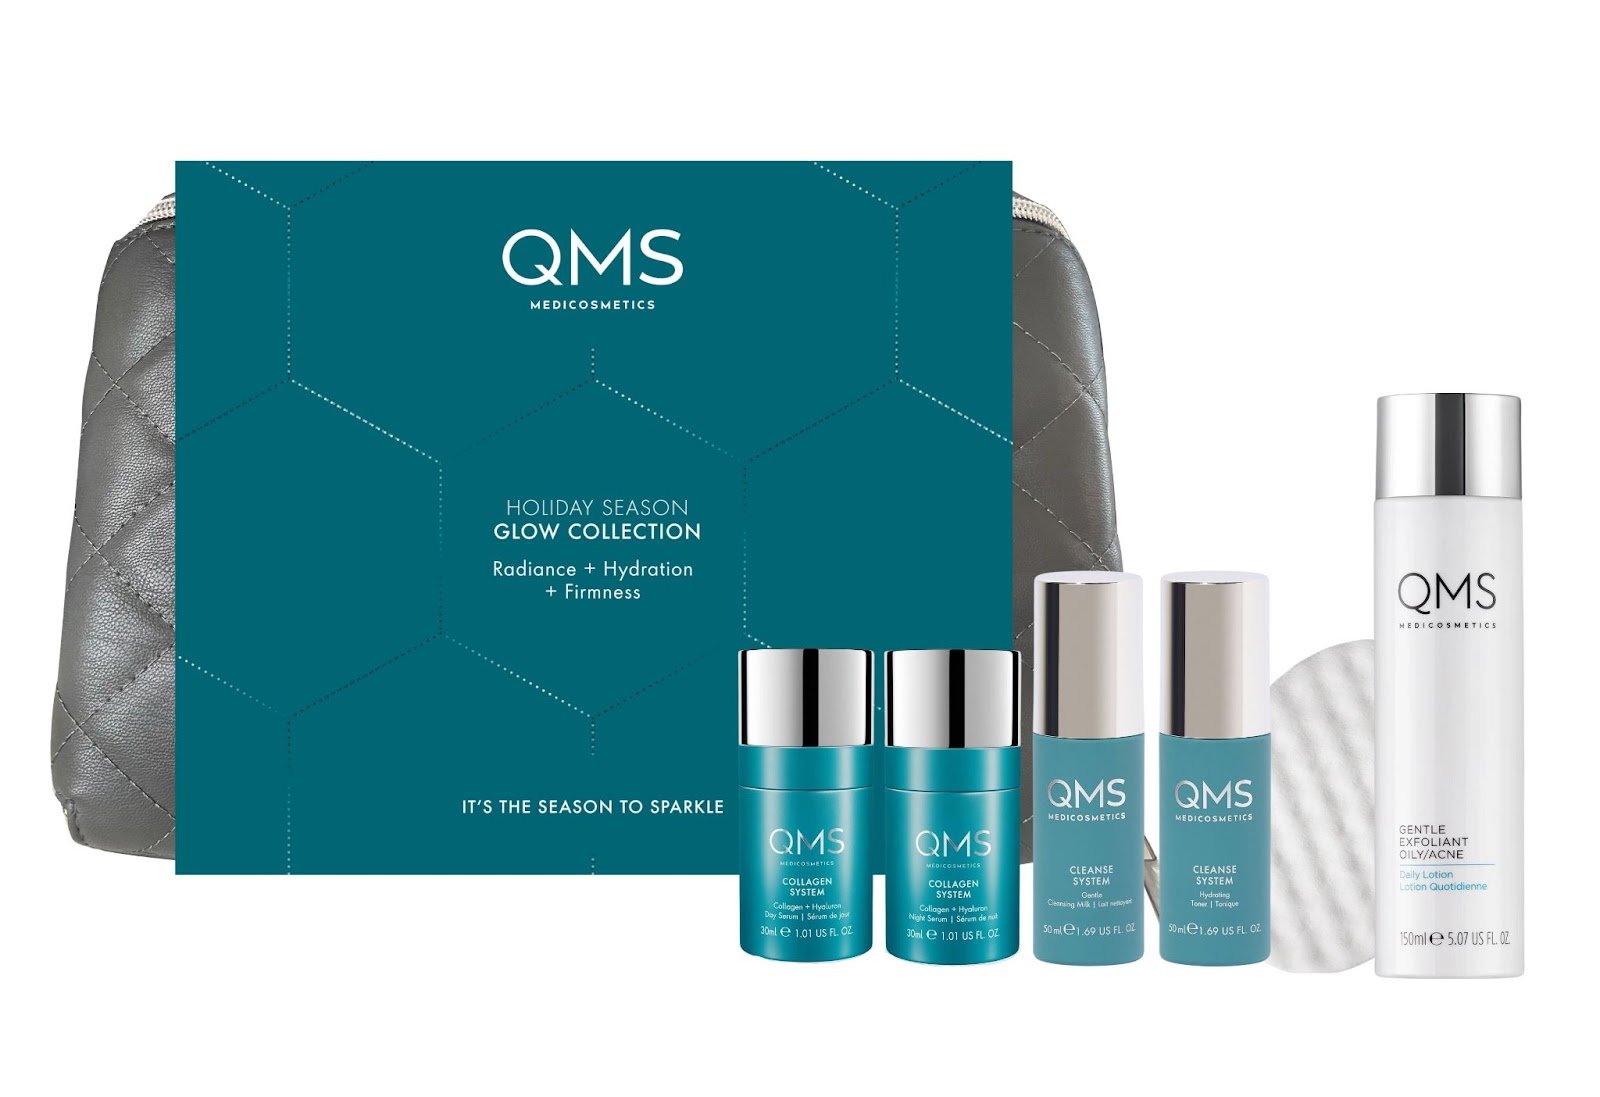 QMS Medicosmetics Festive Season Glow Collection 